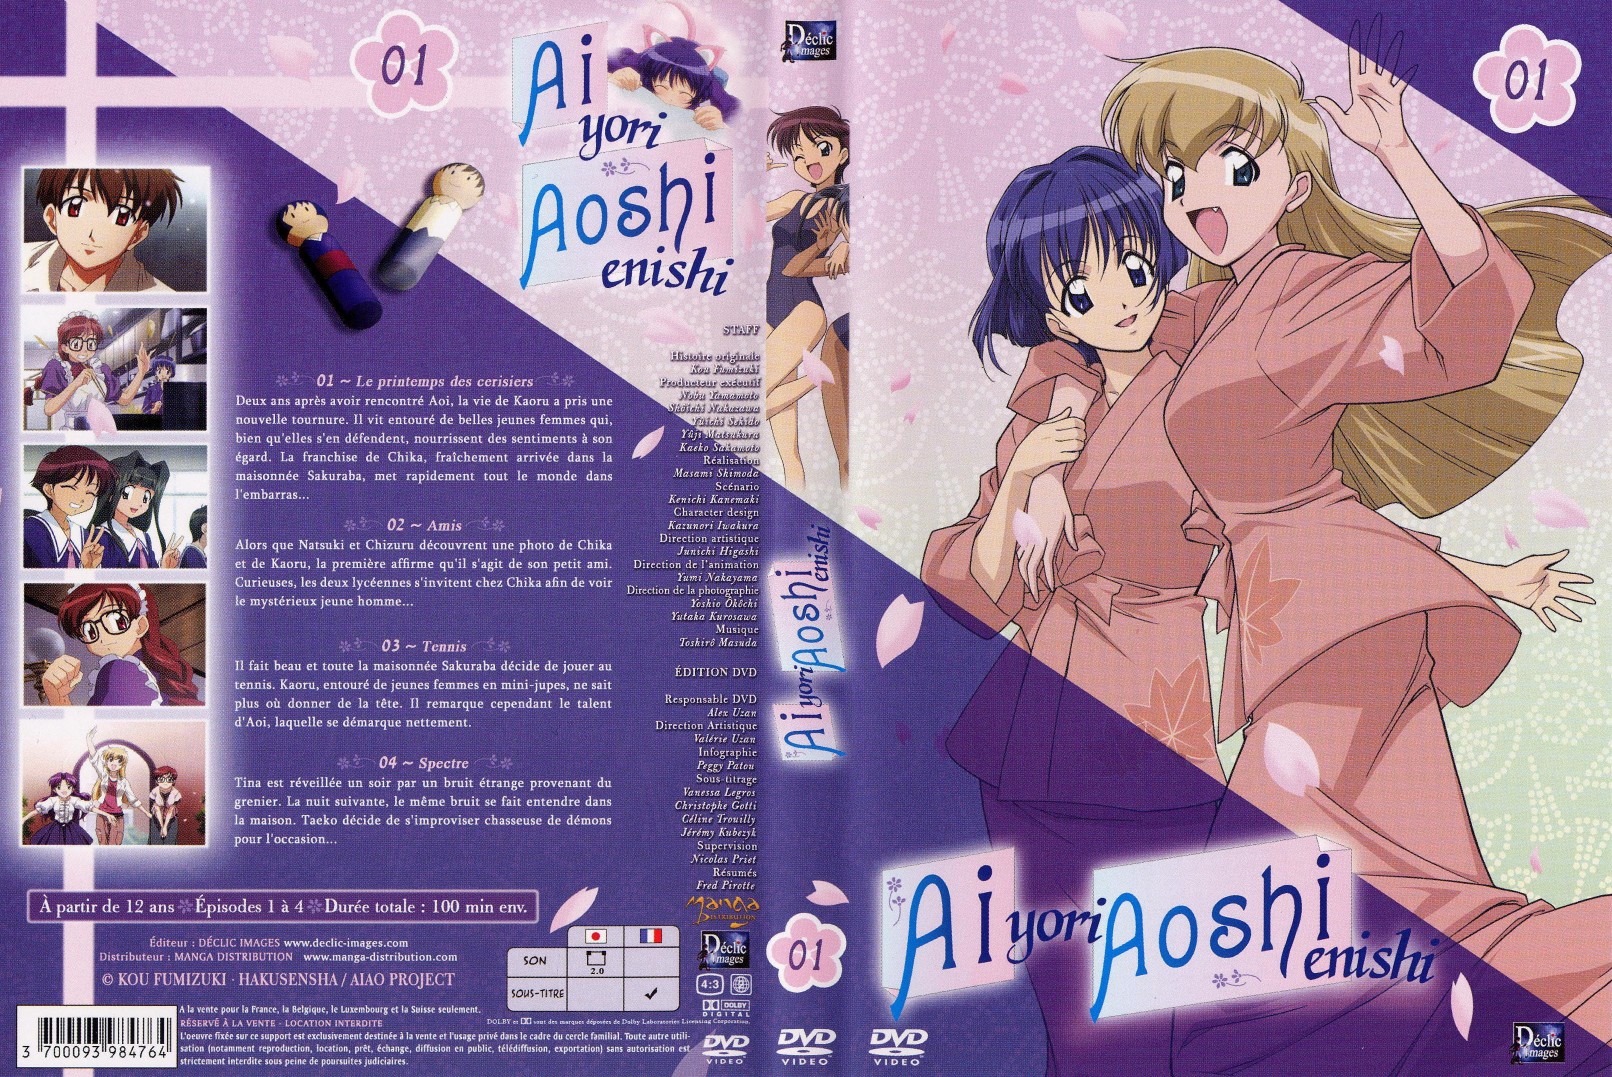 Jaquette DVD Aiyori Aoshienishi vol 1